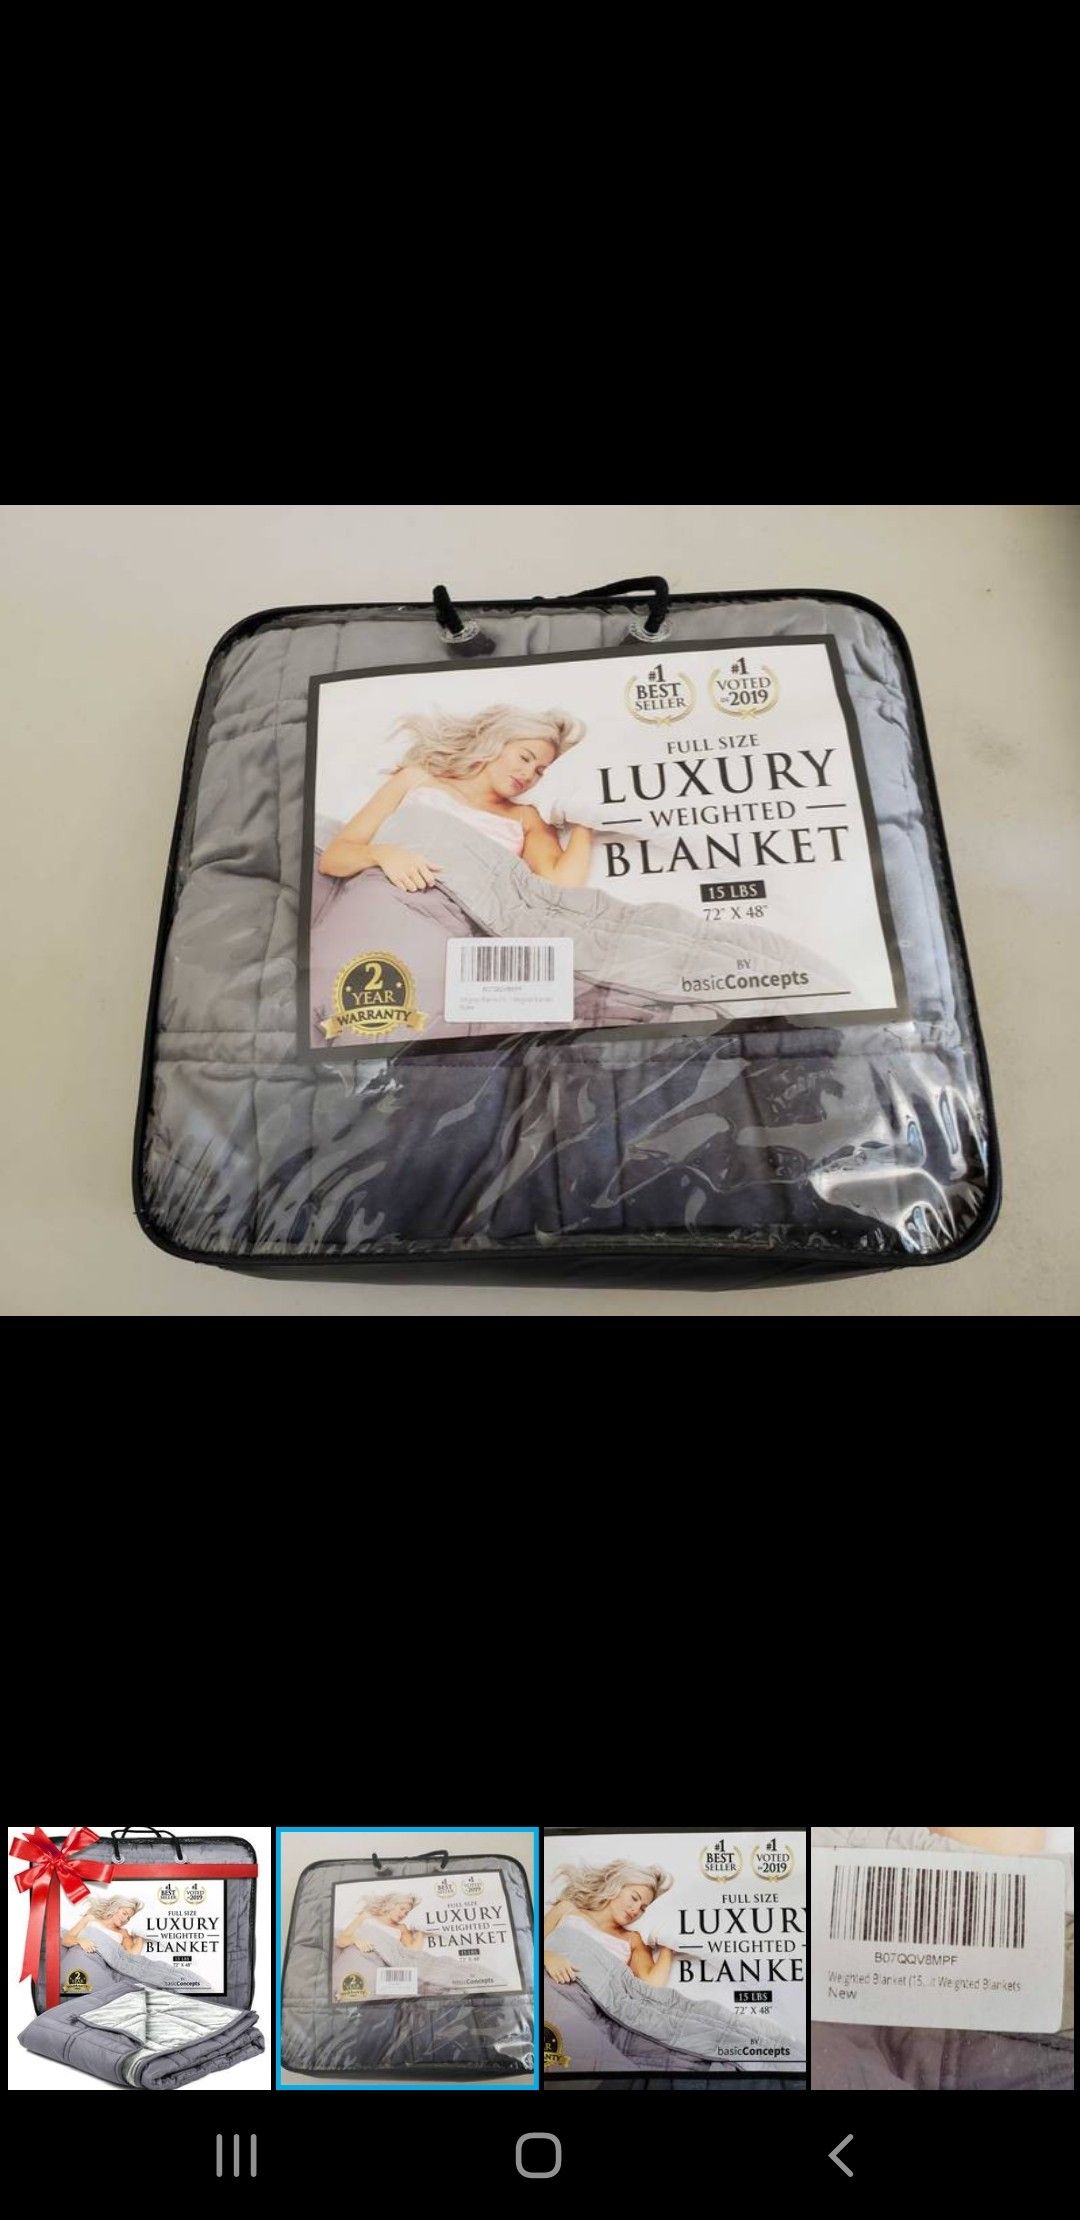 Basic Concepts Full Size luxury Weighted Blanket, 15 lbs, Cooling Weighted Blanket for Full Size Bed, 72" x 48", Machine Washable